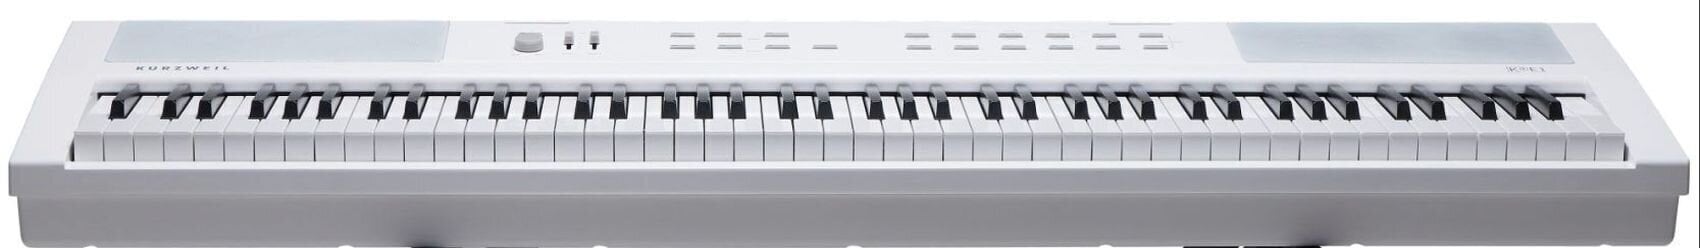 Cyfrowe stage pianino Kurzweil Ka E1 Cyfrowe stage pianino